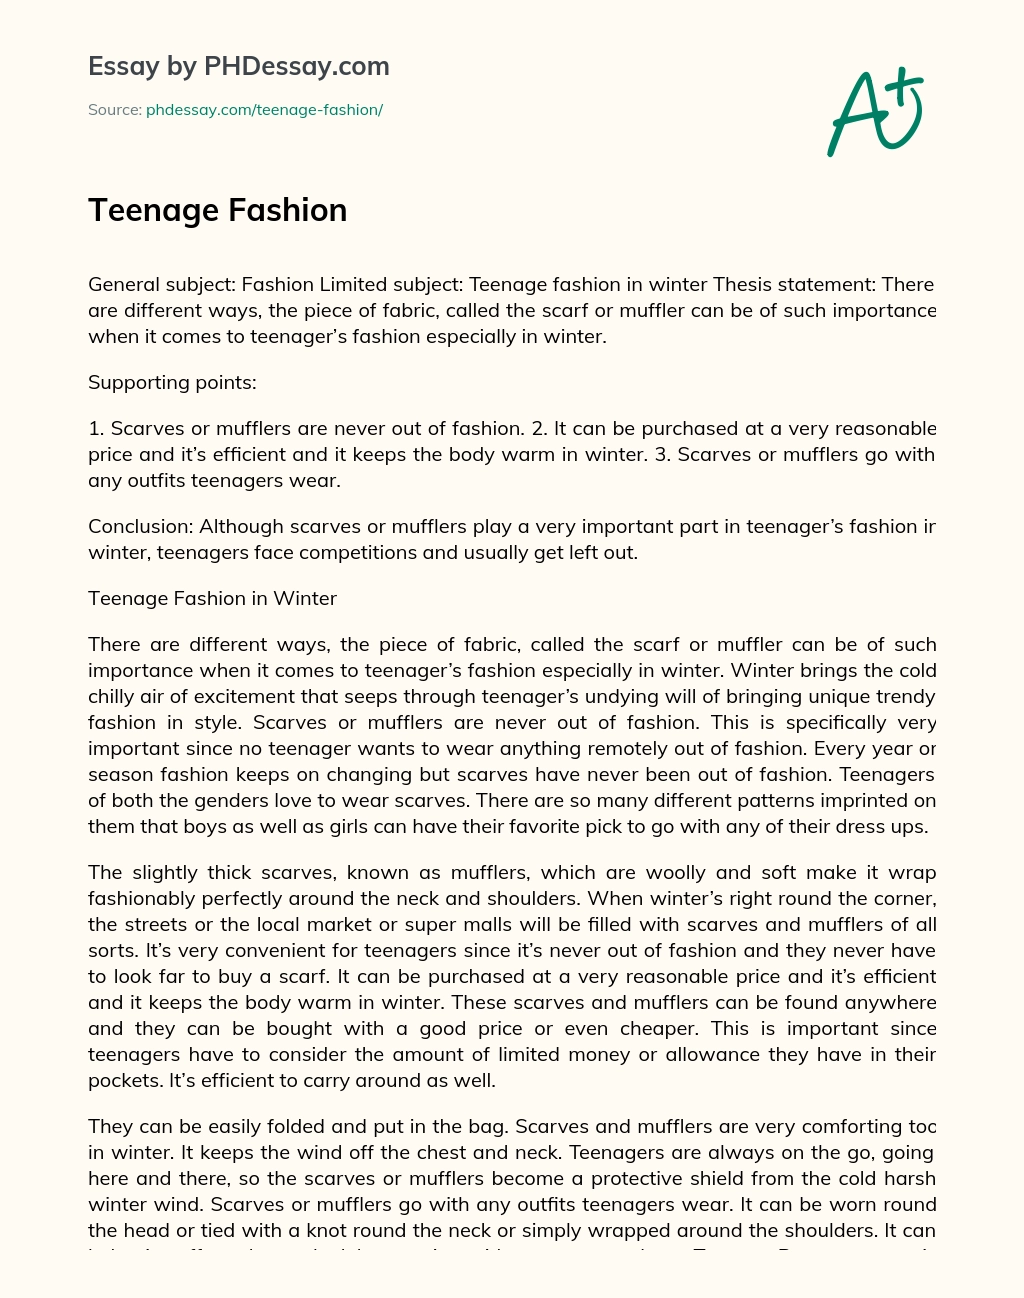 Teenage Fashion essay